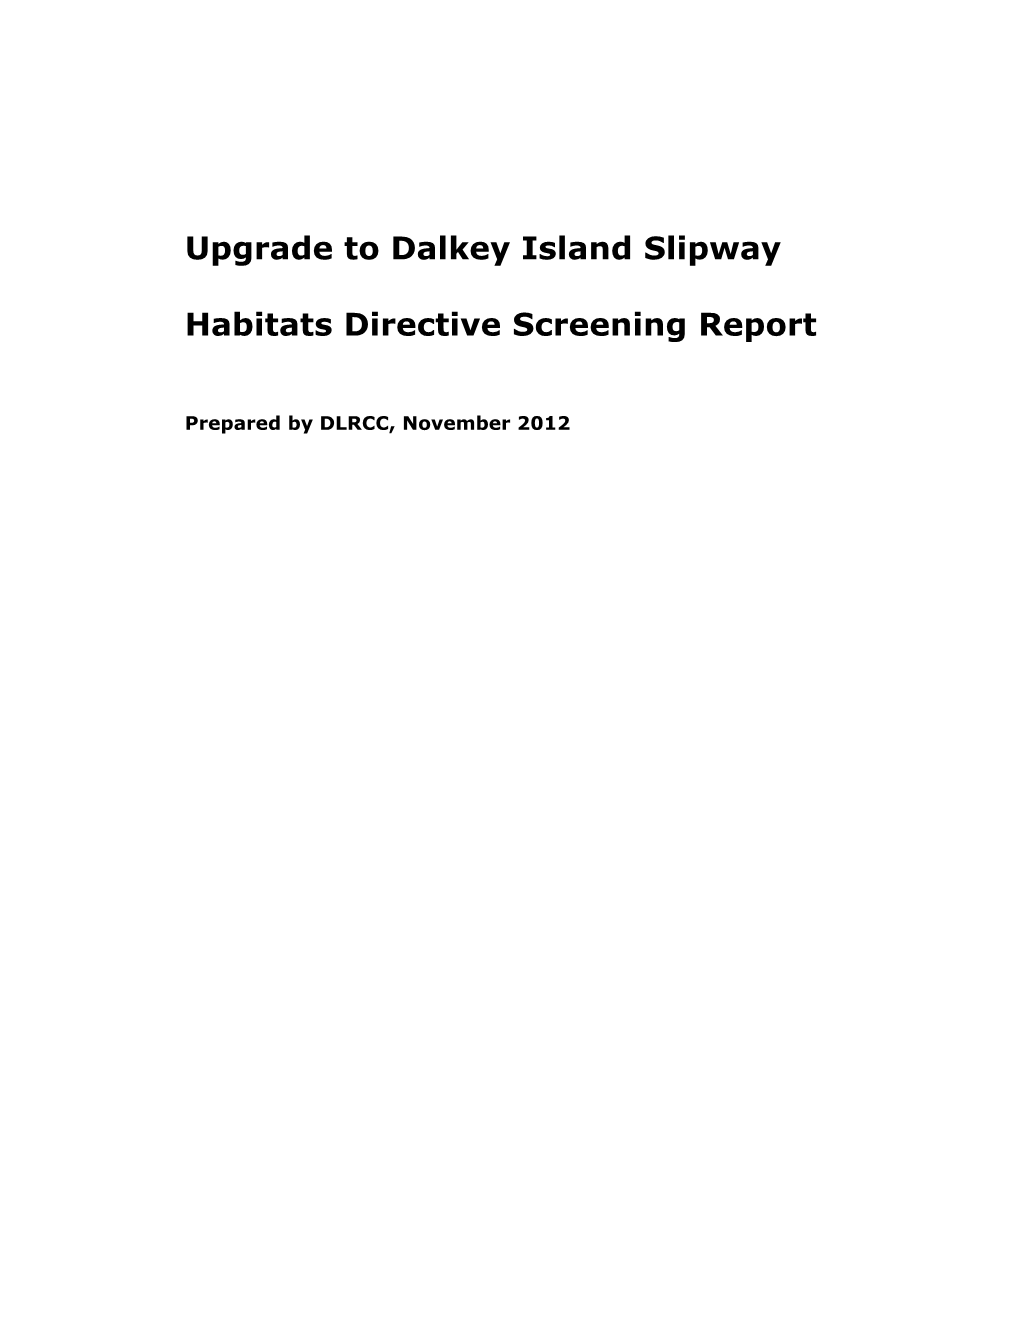 Upgrade to Dalkey Island Slipway Habitats Directive Screening Report